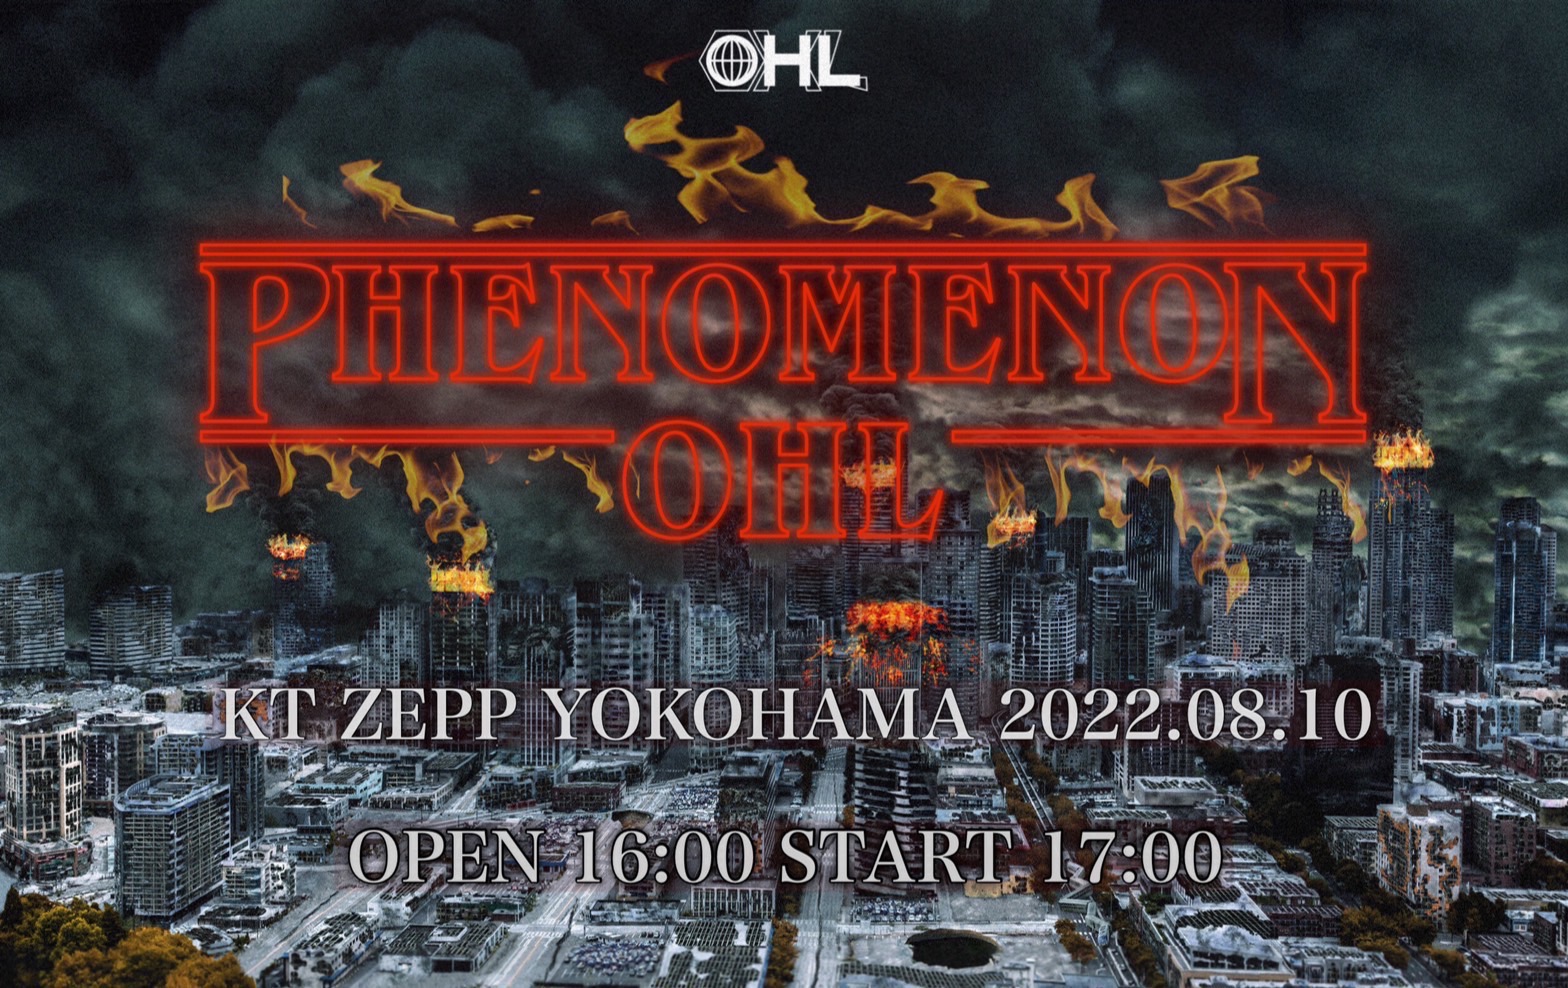 OHL ONE MAN LIVE -PHENOMENON-